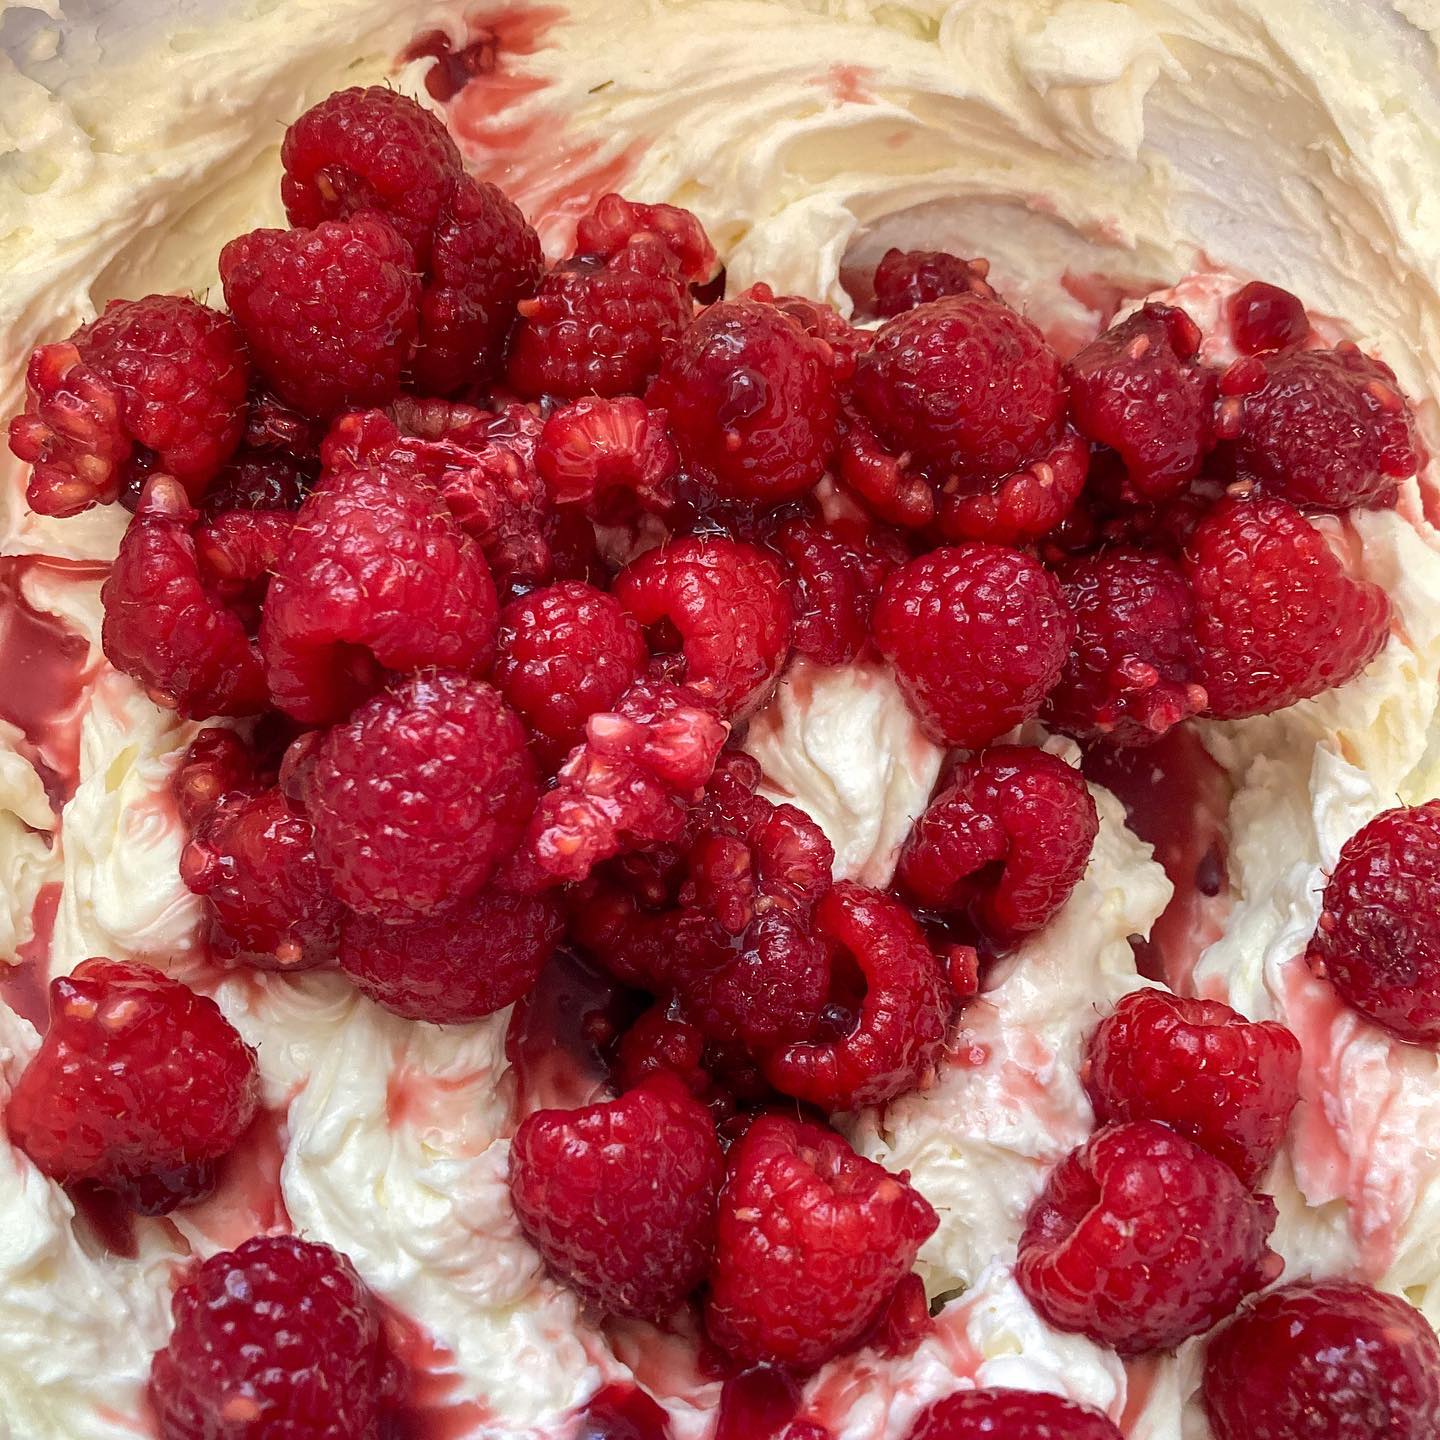 Raspberry Cream Pie Recipe in the works 🥰 . . . . . . . . . . #rasperry #pie #fruit #foodphotography #food #foodblogger #foodblog #blogginggals #blackfoodie #blackbloggers #dessertporn #fruitpie #sweettreats #cheatday #instayum #yummyfood #bloglife #lickthespoon